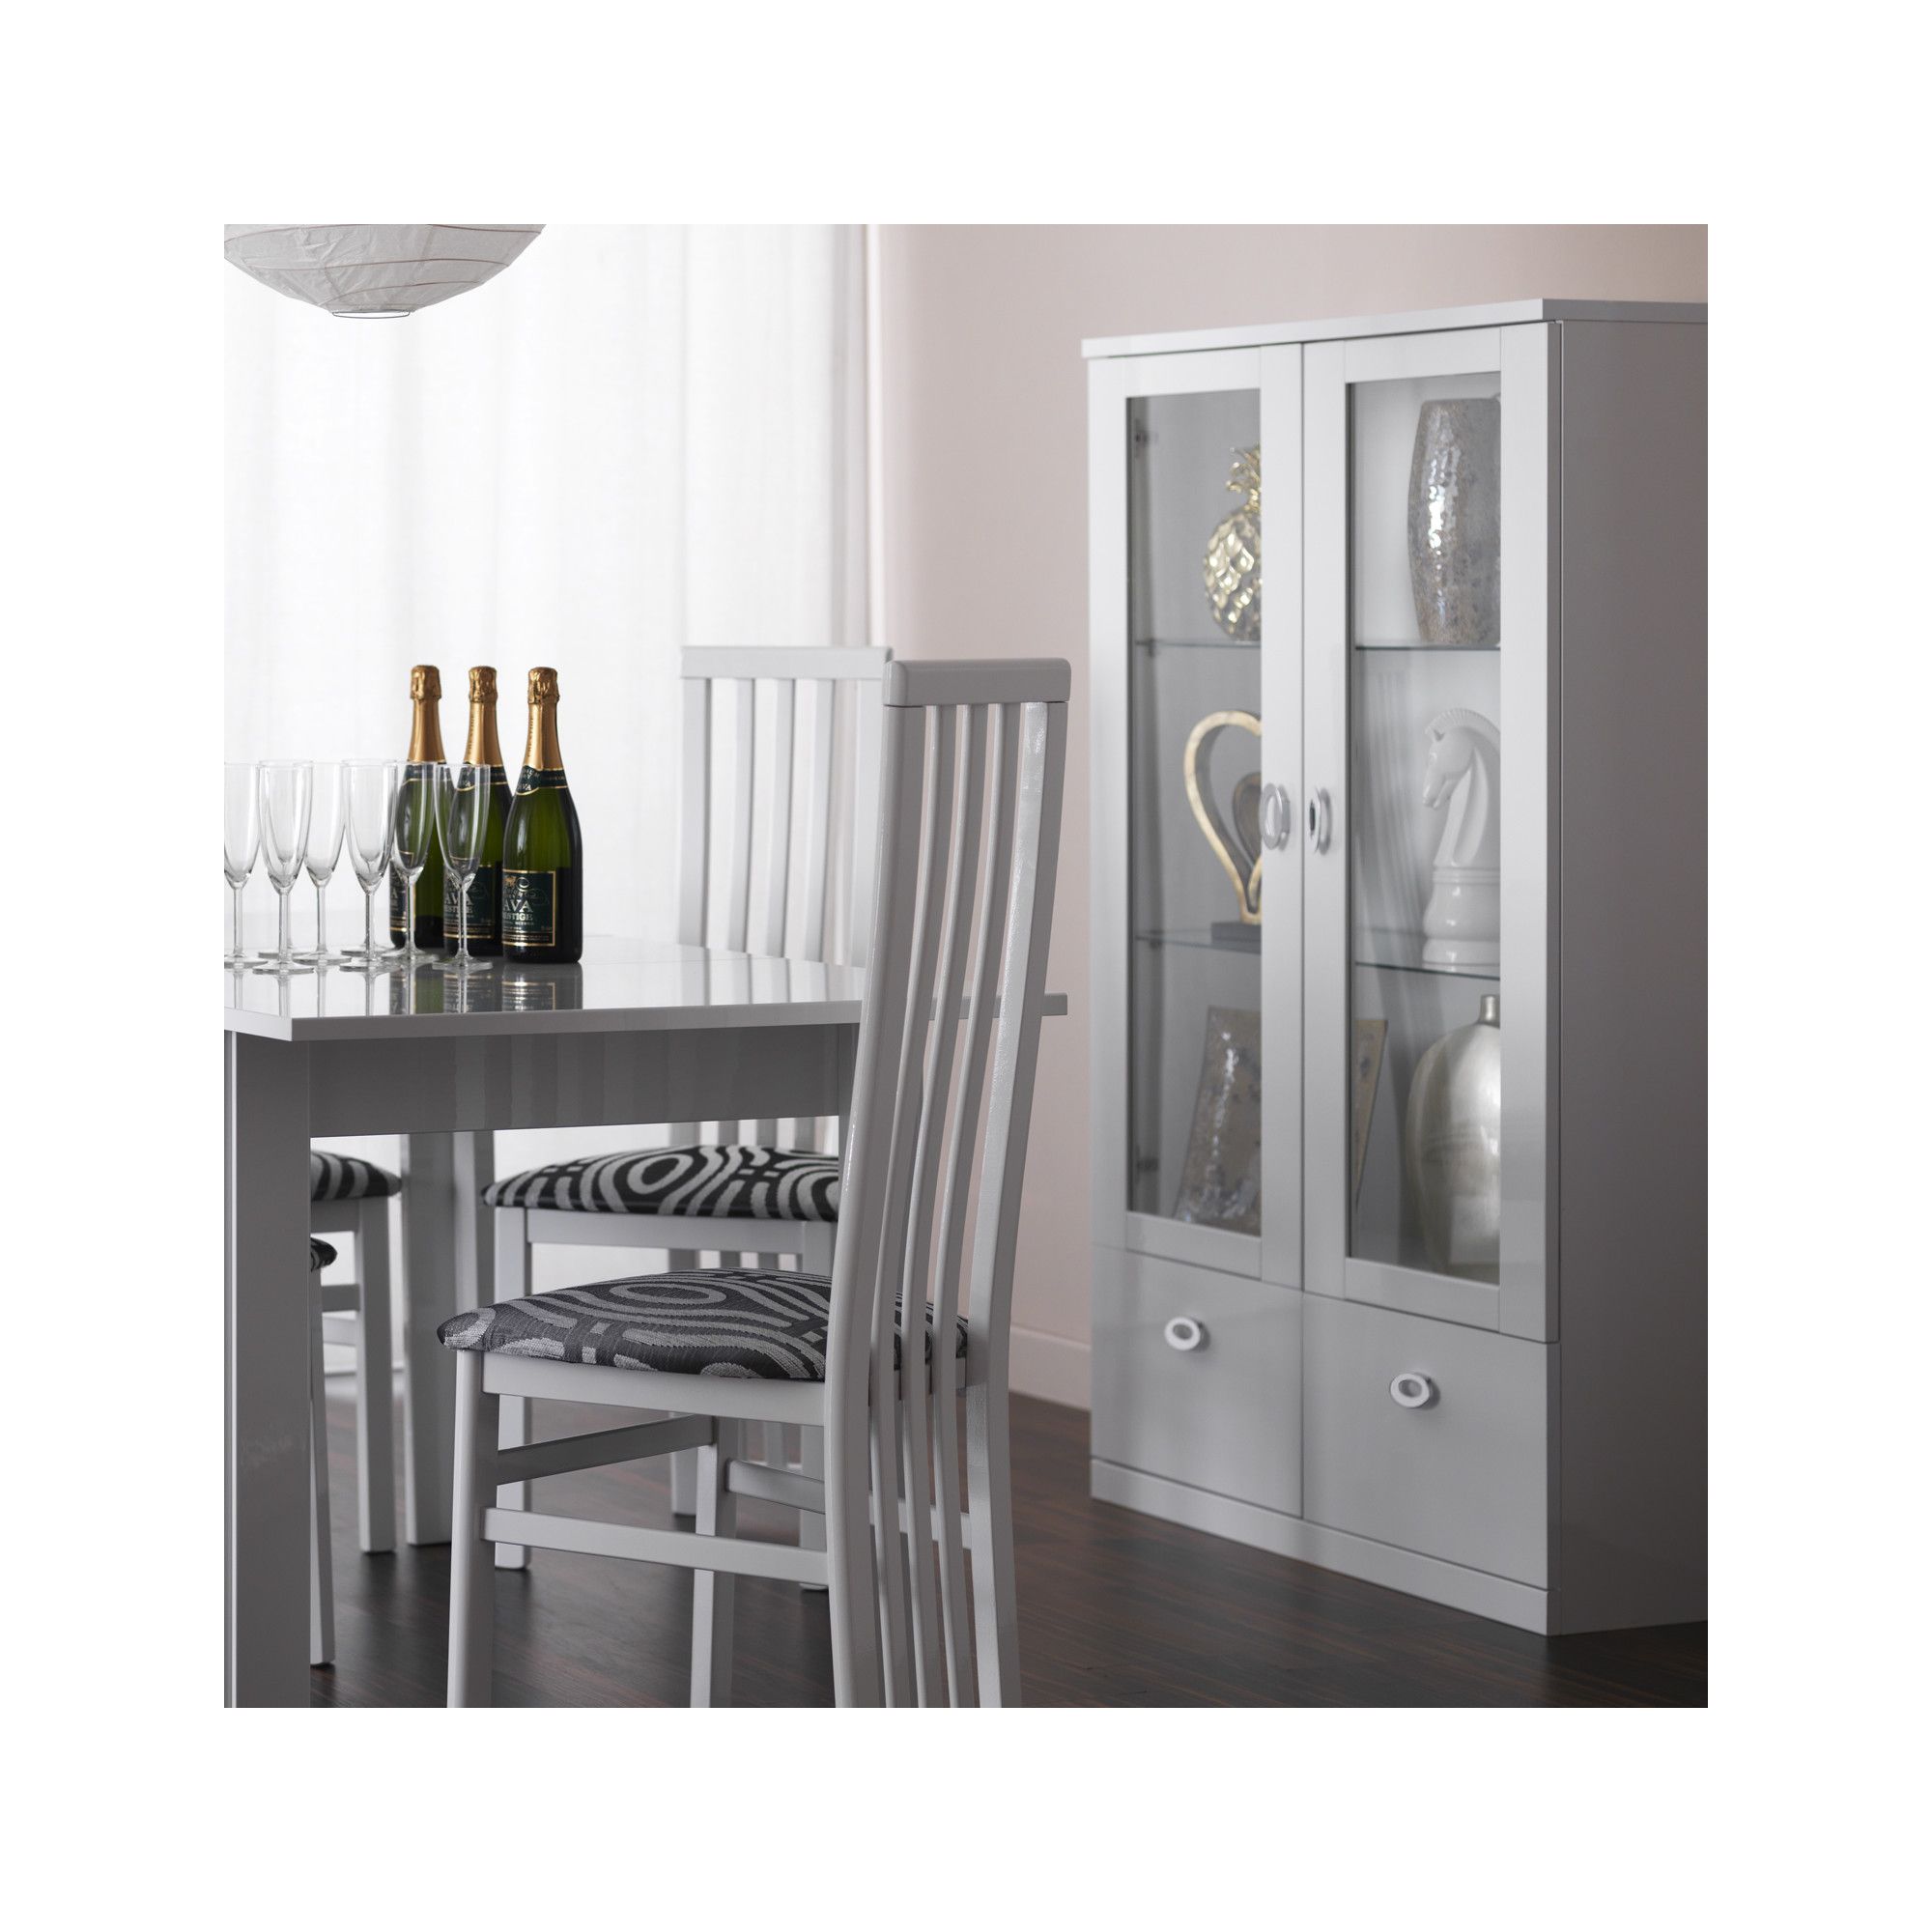 Caxton Manhattan 3 Glazed Door / 2 door Display Cabinet in White Gloss at Tesco Direct